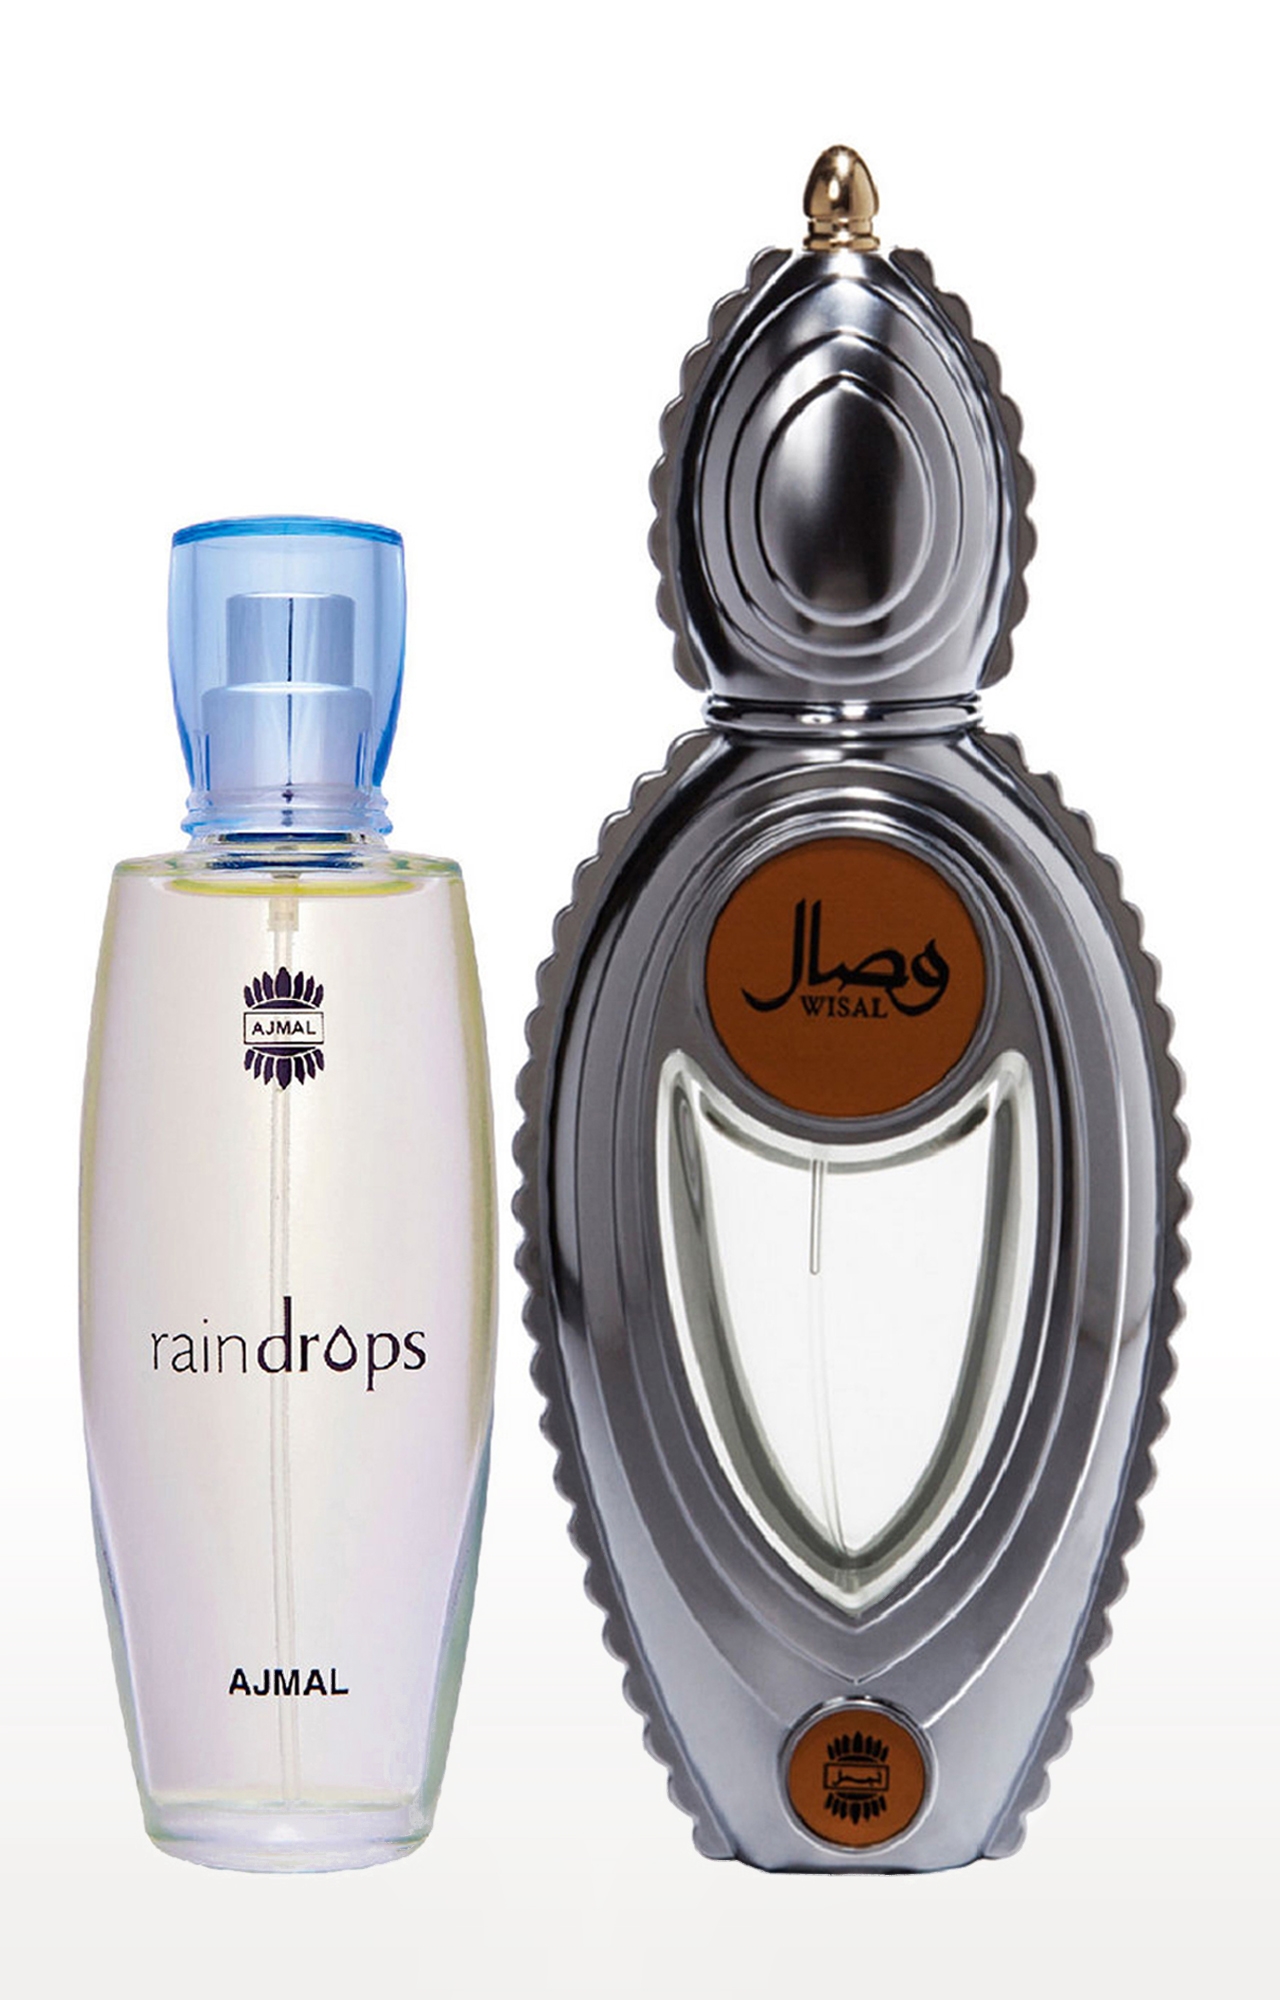 Ajmal Raindrops EDP Perfume 50ml for Women and Wisal EDP Musky Perfume 50ml for Women